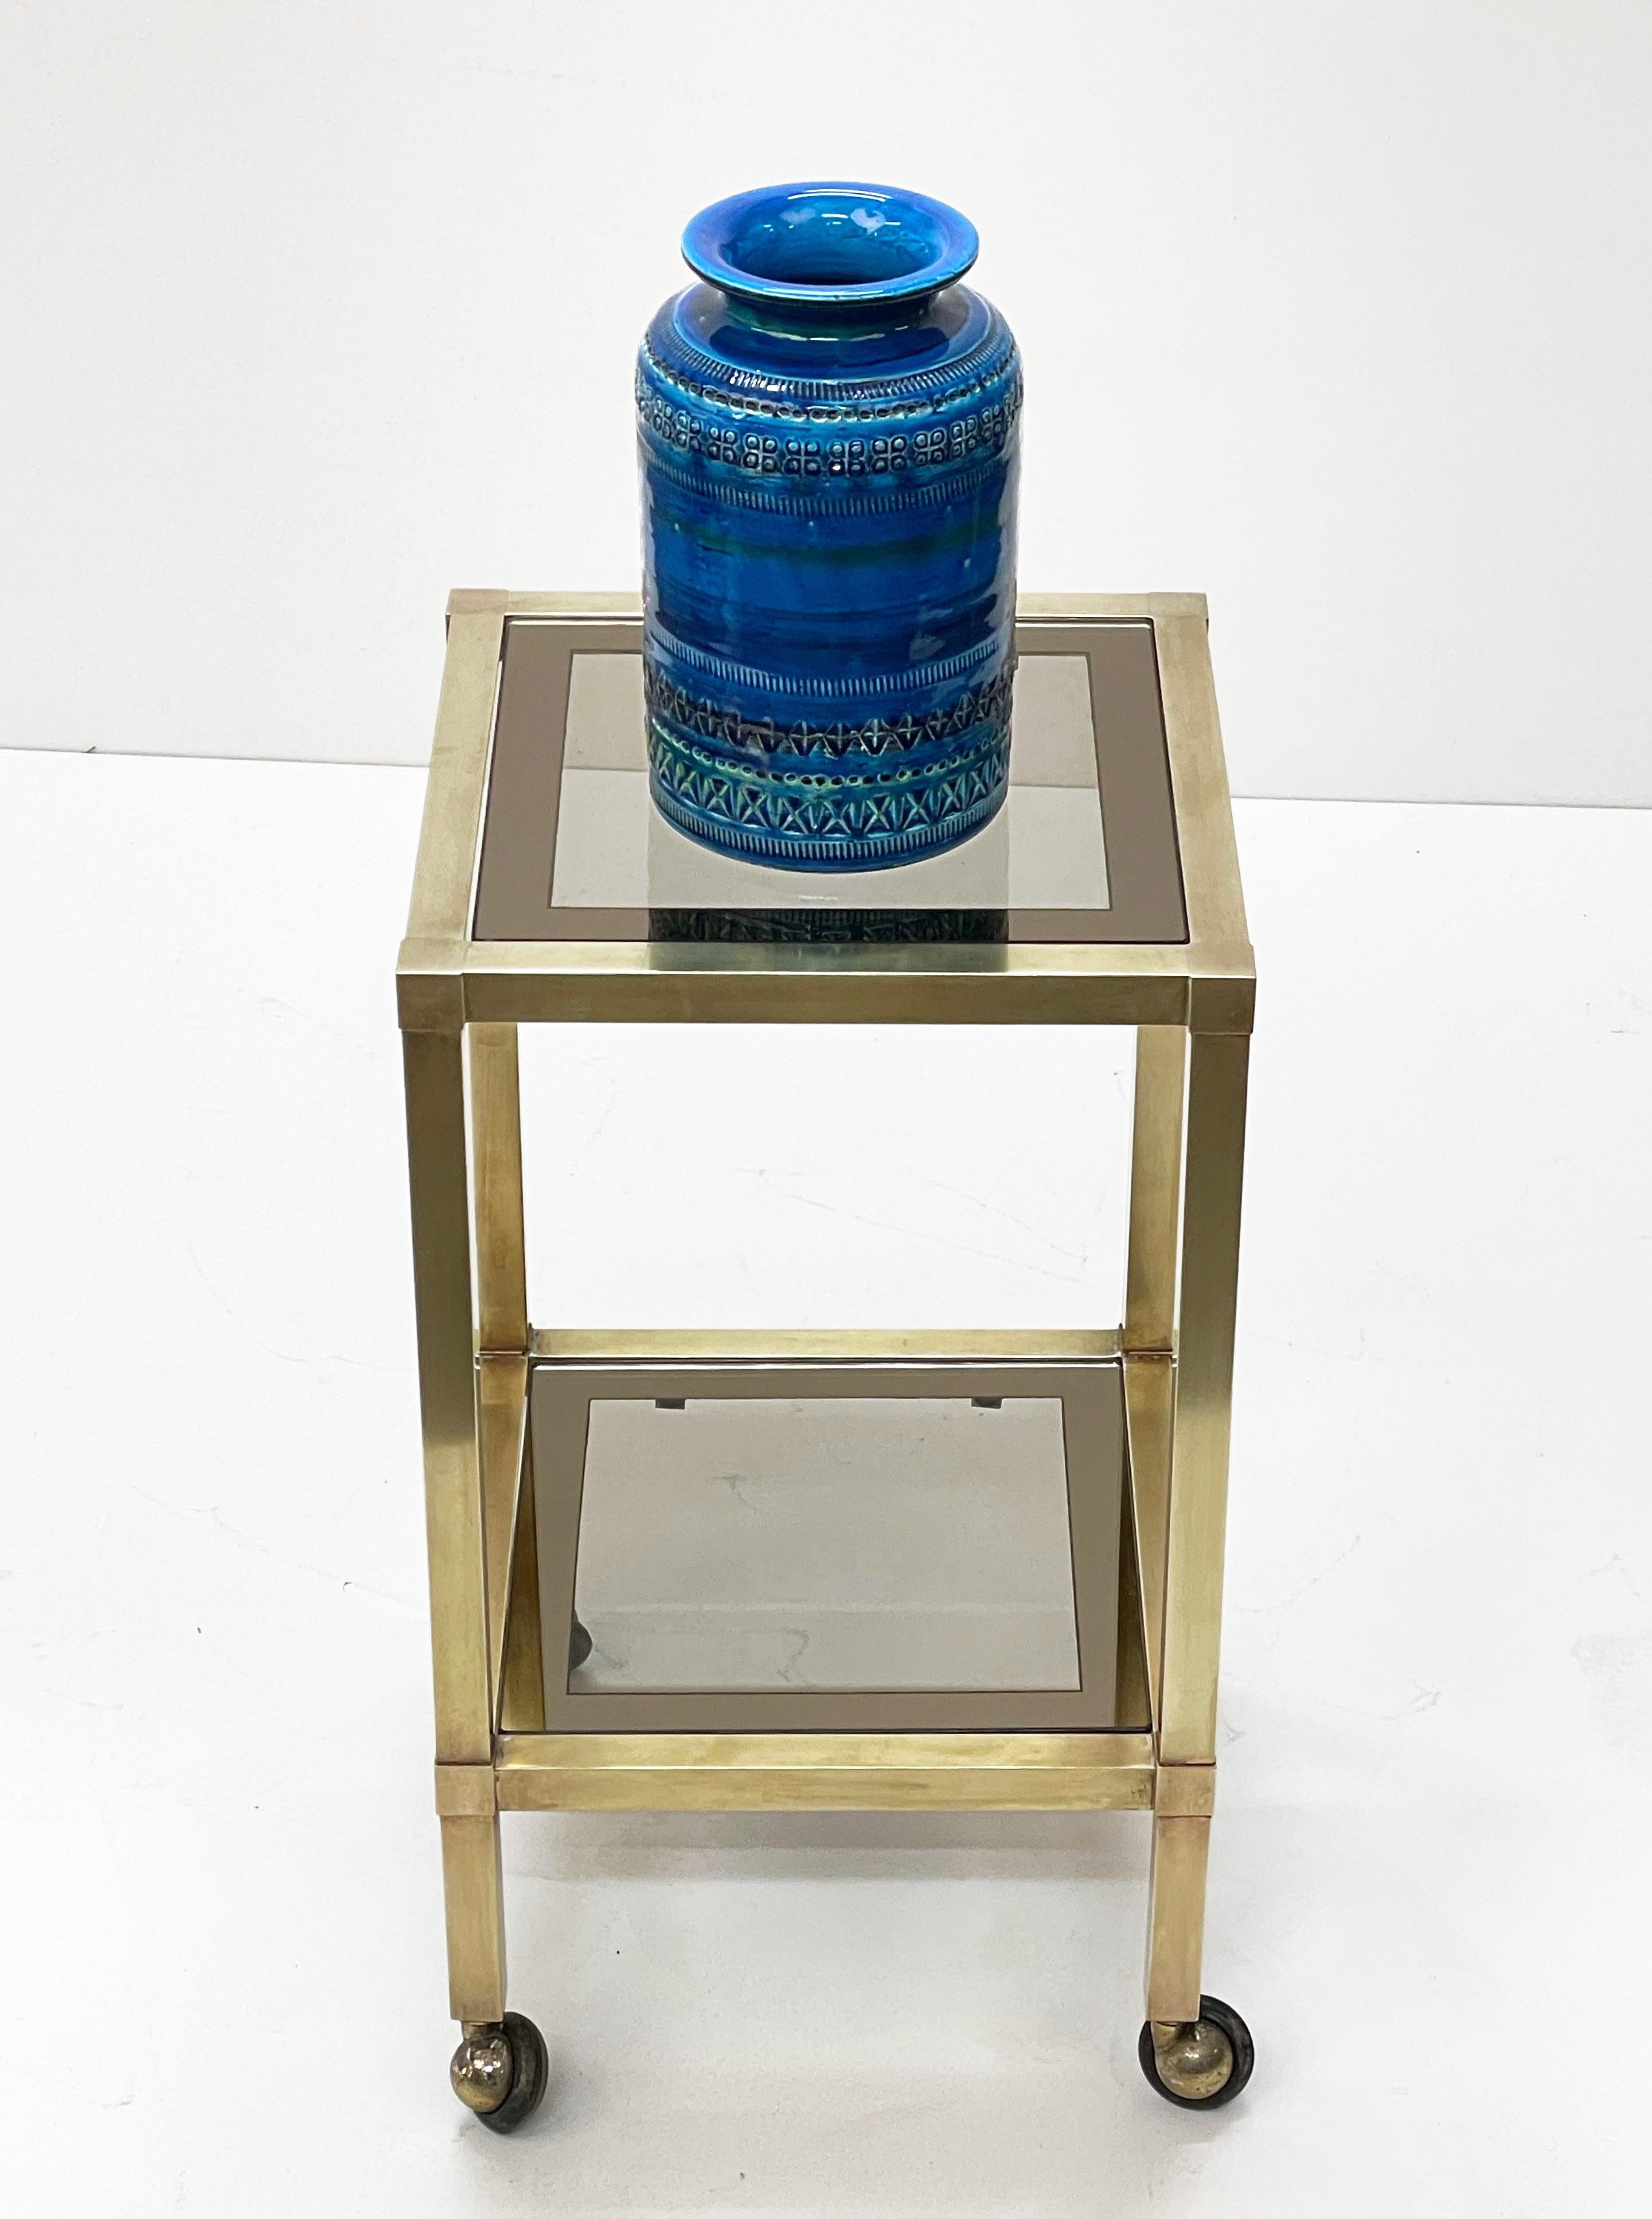 Montelupo and Londi Midcentury Blue Ceramic Italian Vase for Bitossi, 1960s For Sale 1